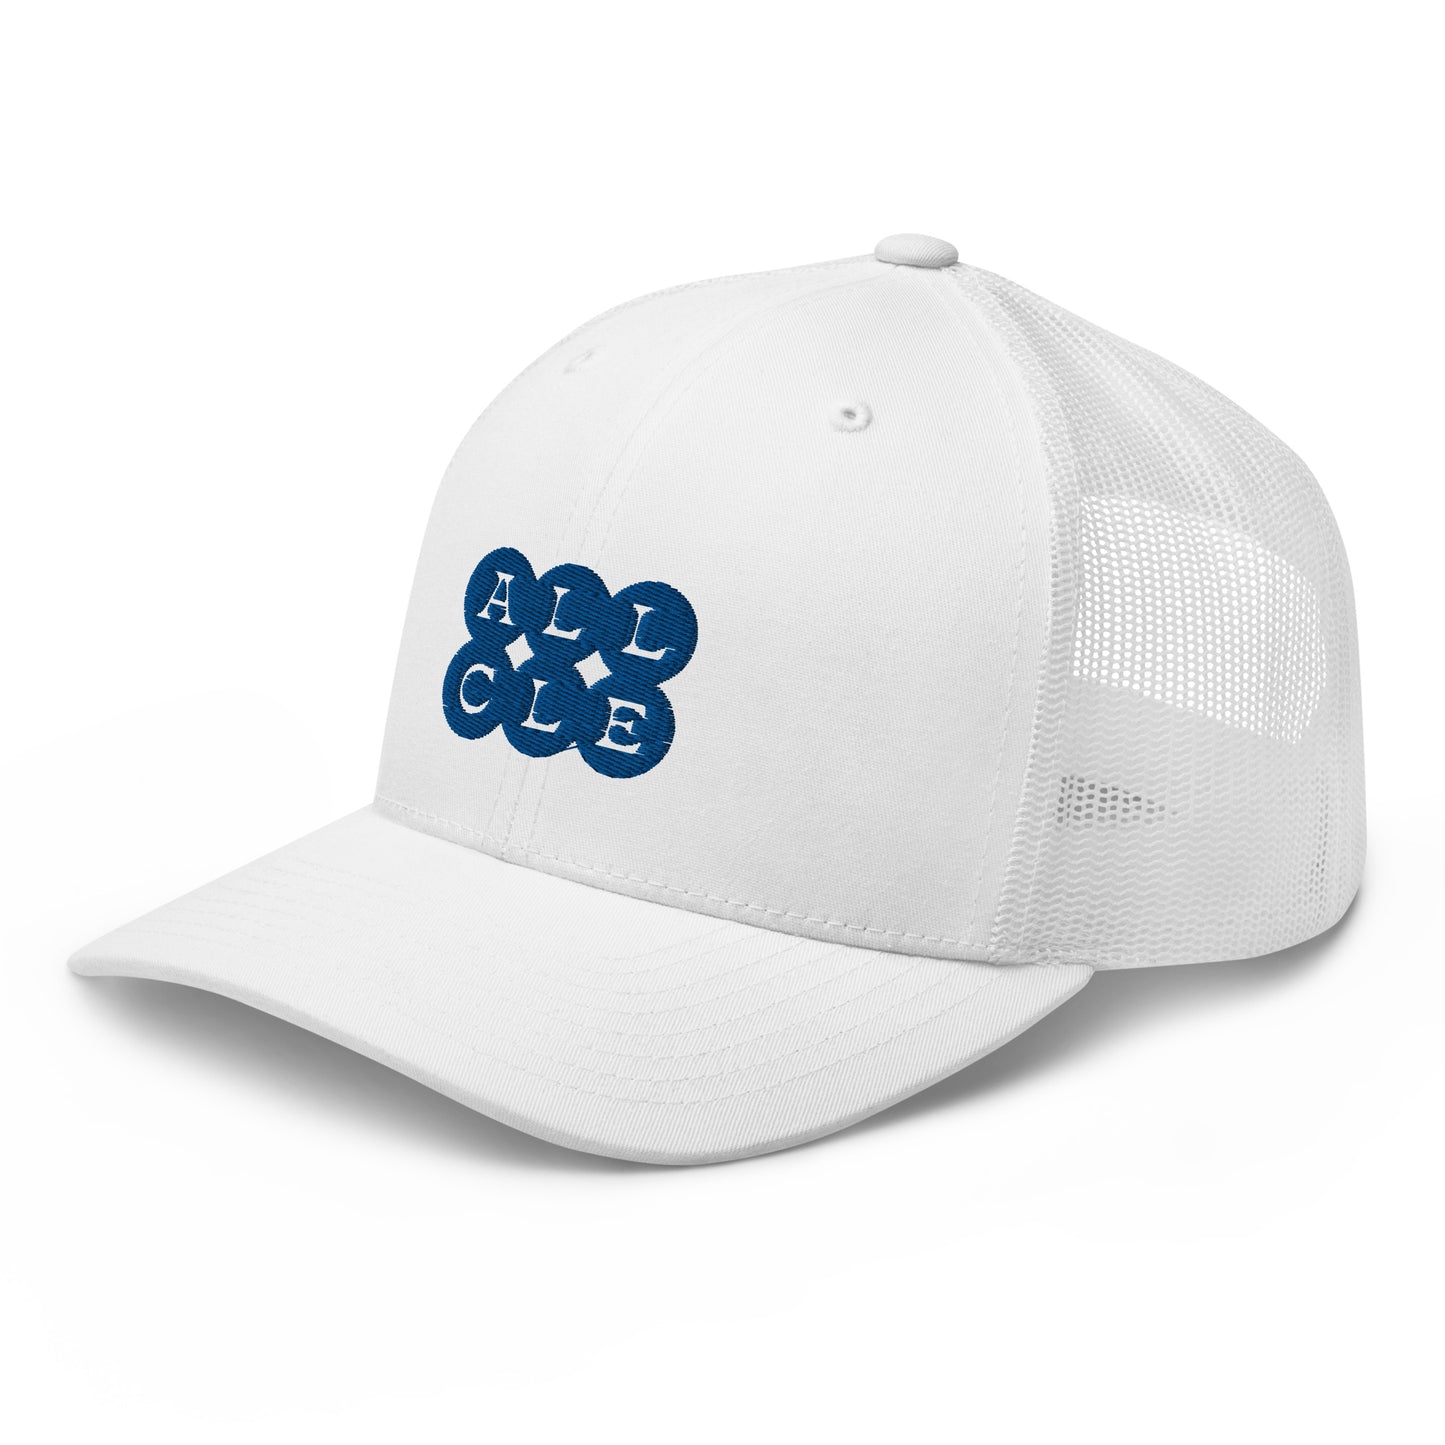 ALL CLE Trucker Hat (Baseball Season Edition)